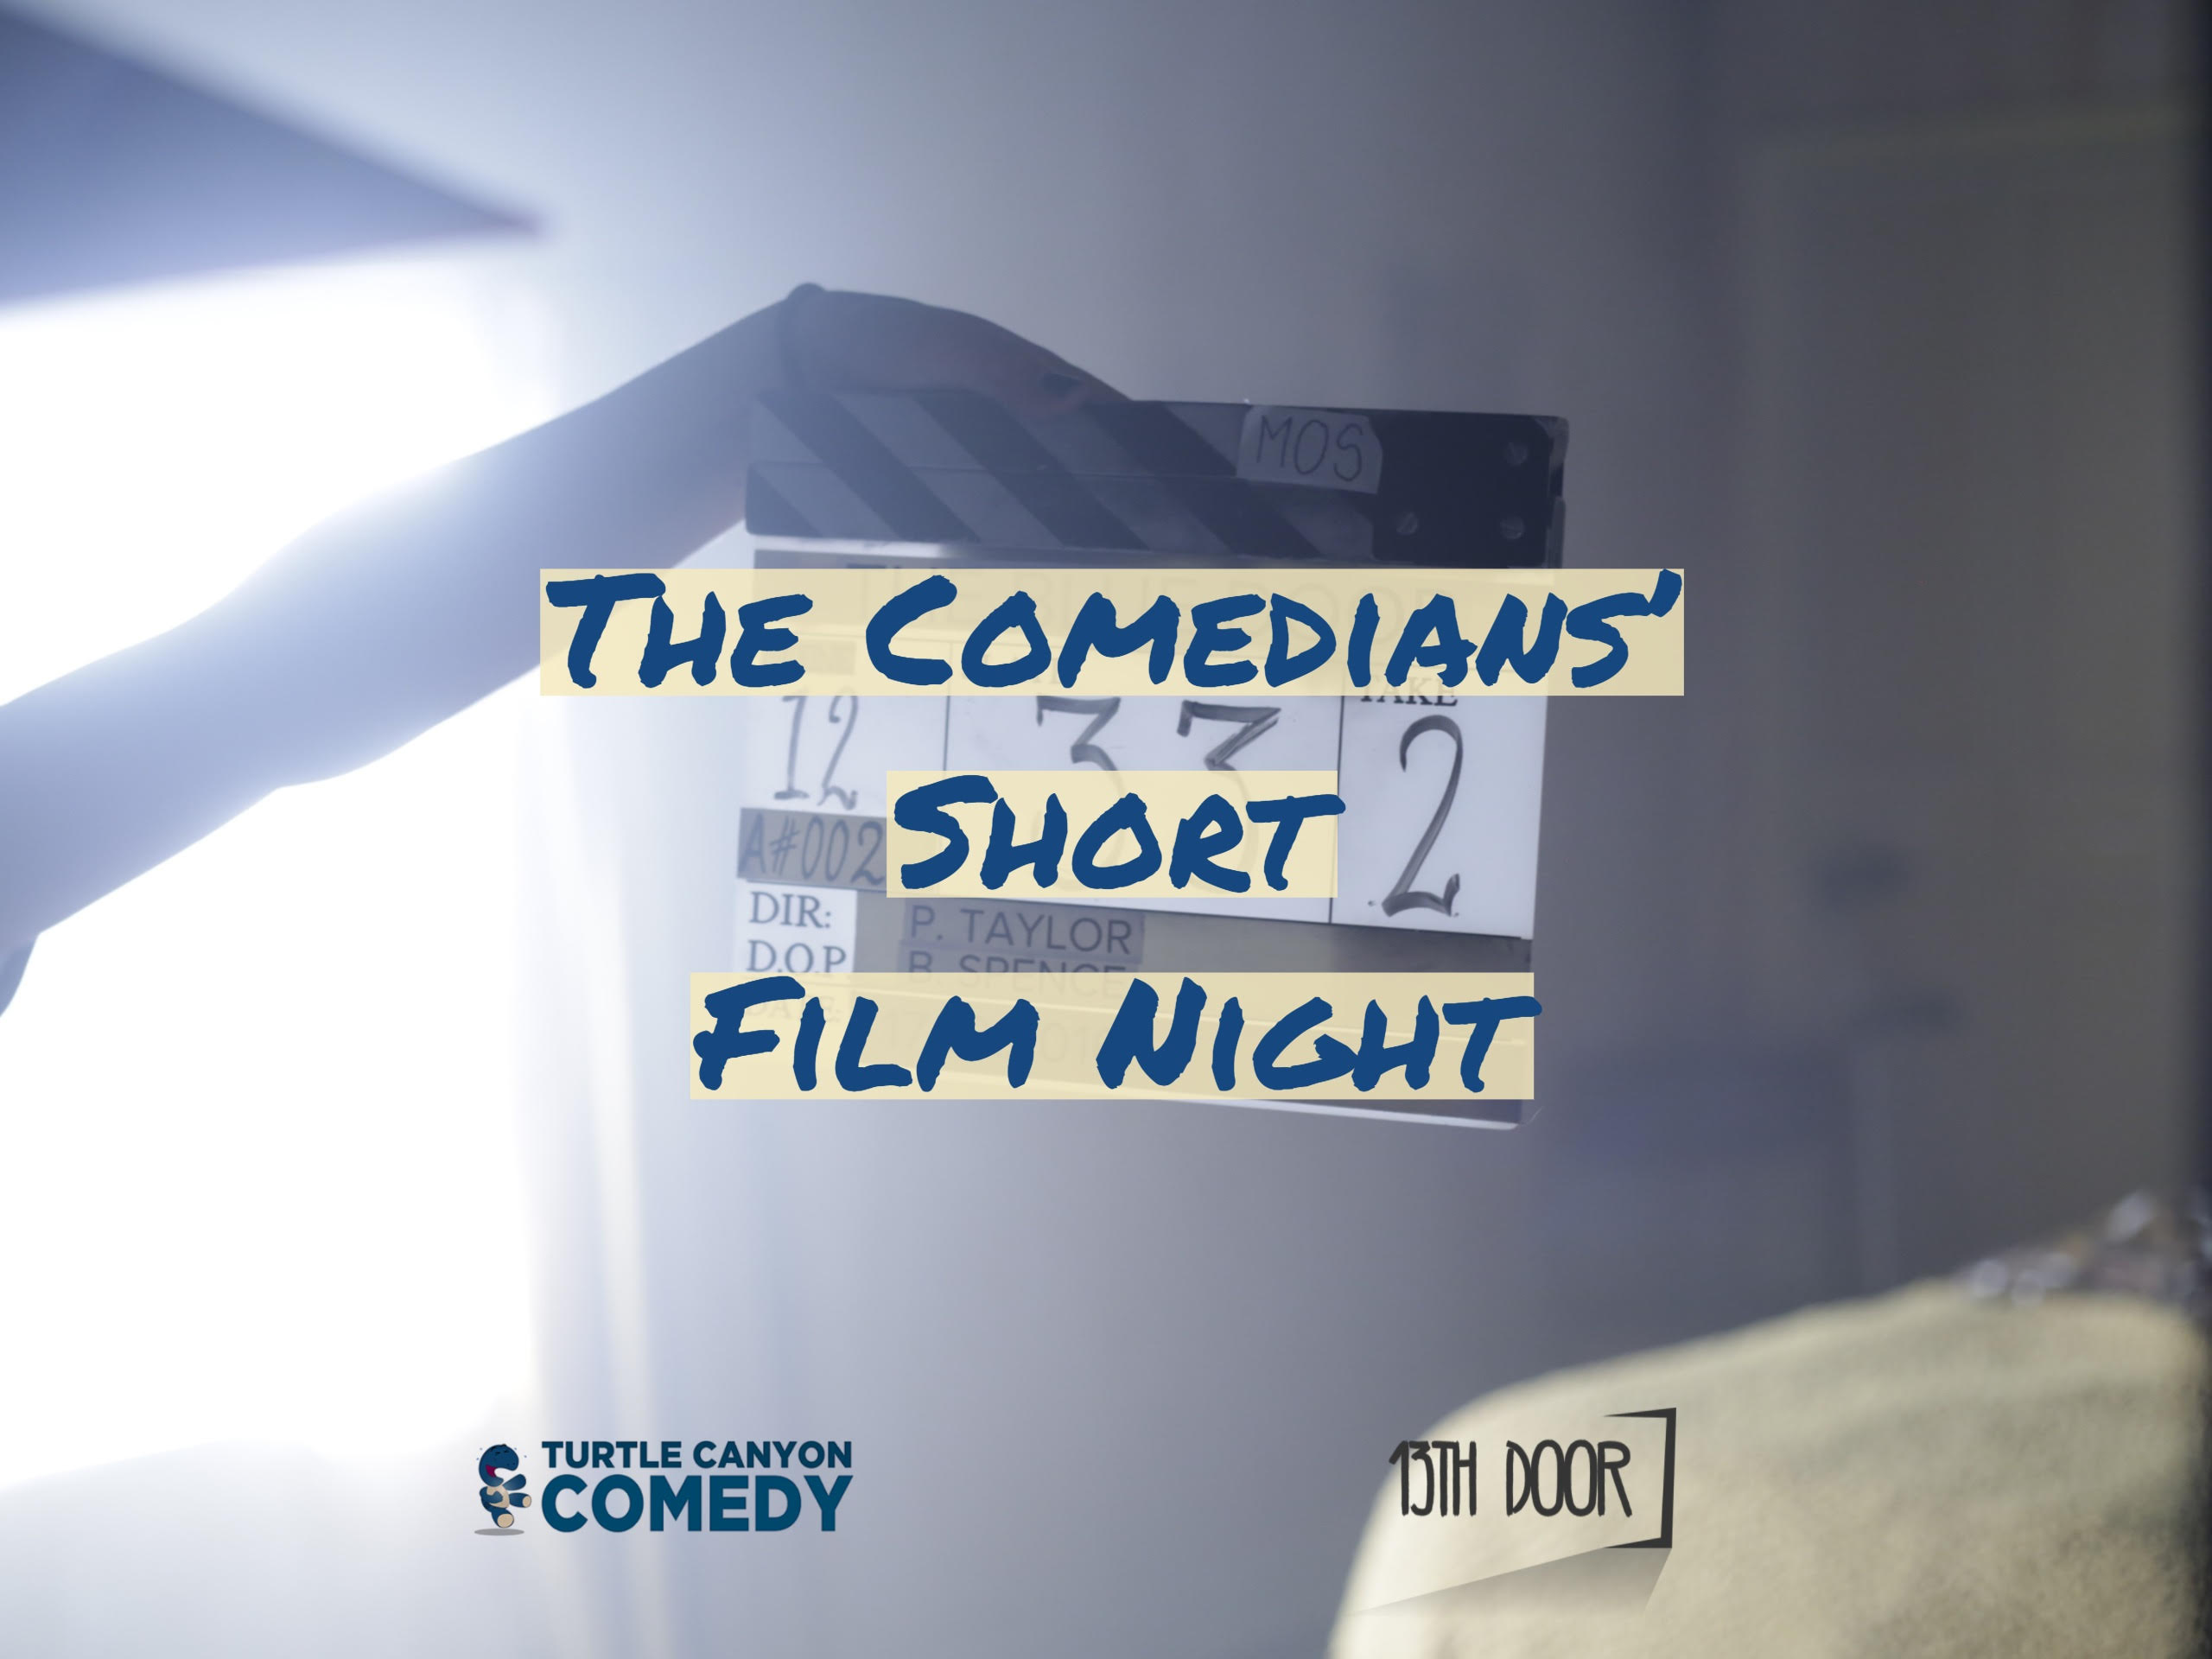 The Comedians’ Short Film Night